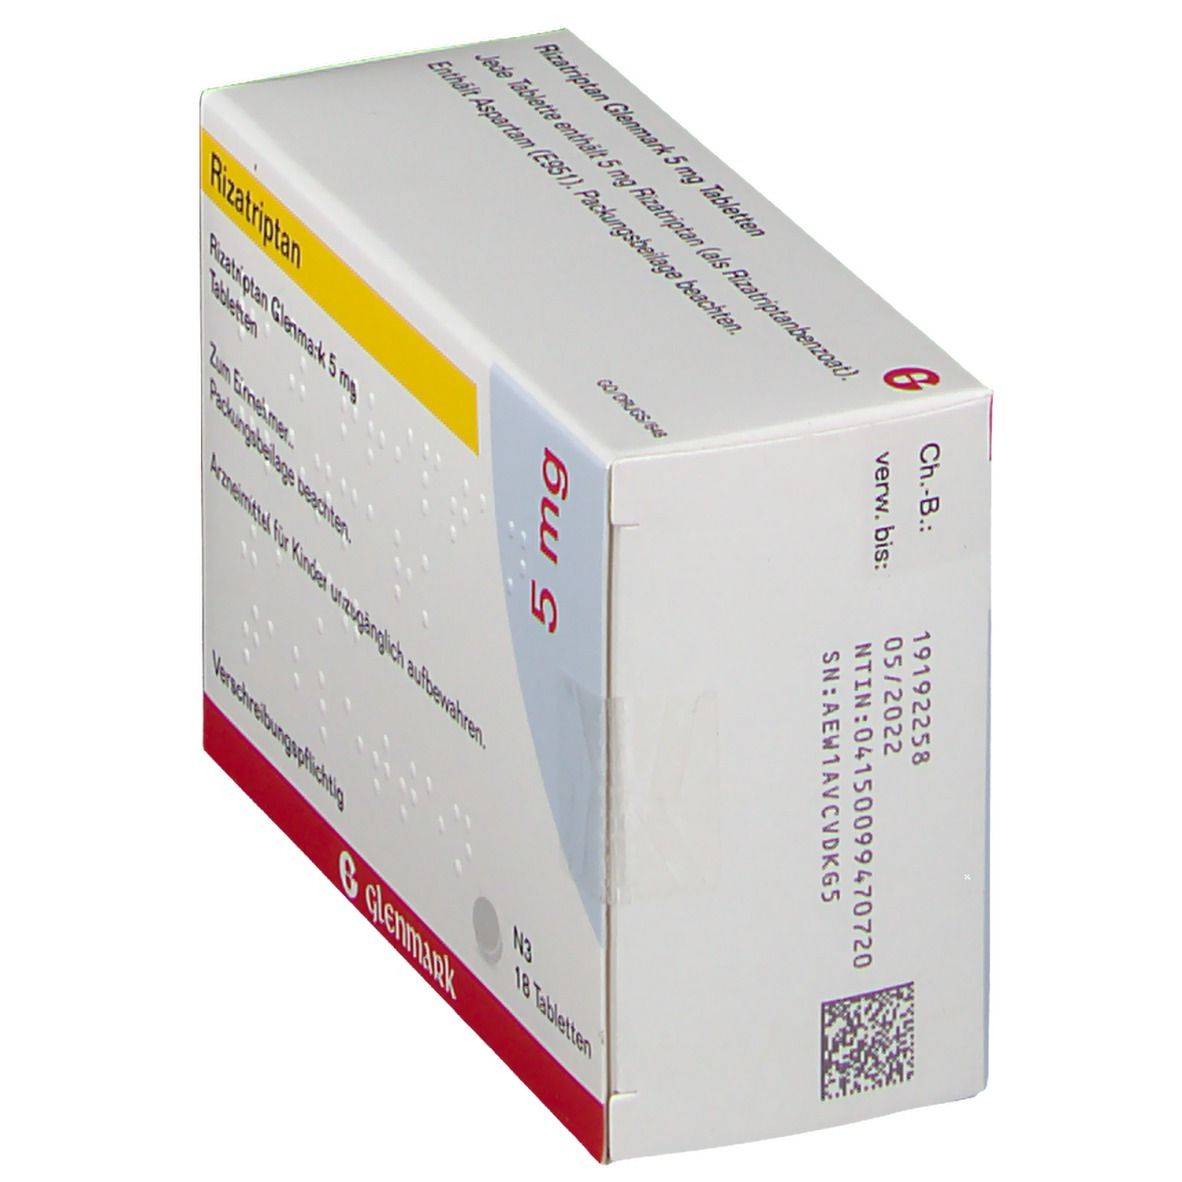 Rizatriptan Glenmark 5 mg